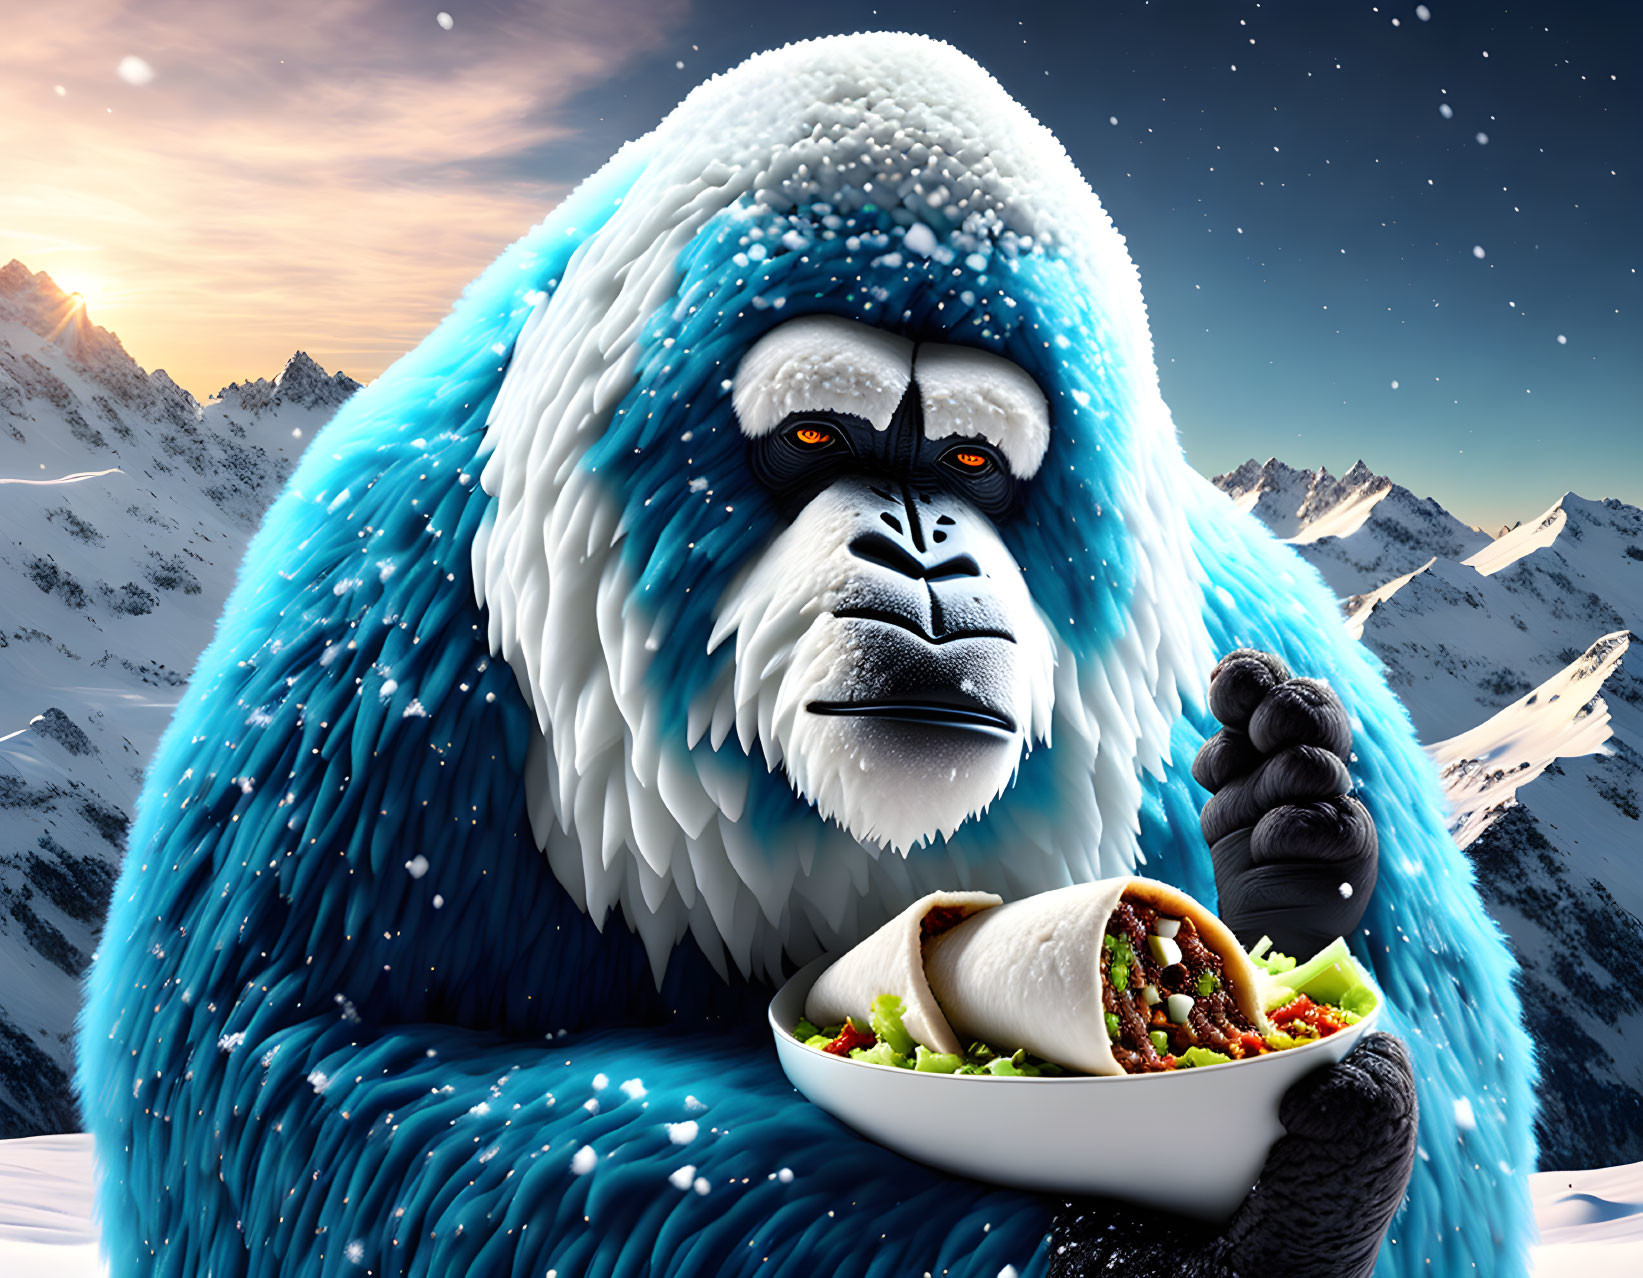 Colorful Blue Gorilla Holding Burrito in Snowy Mountain Sunset Scene